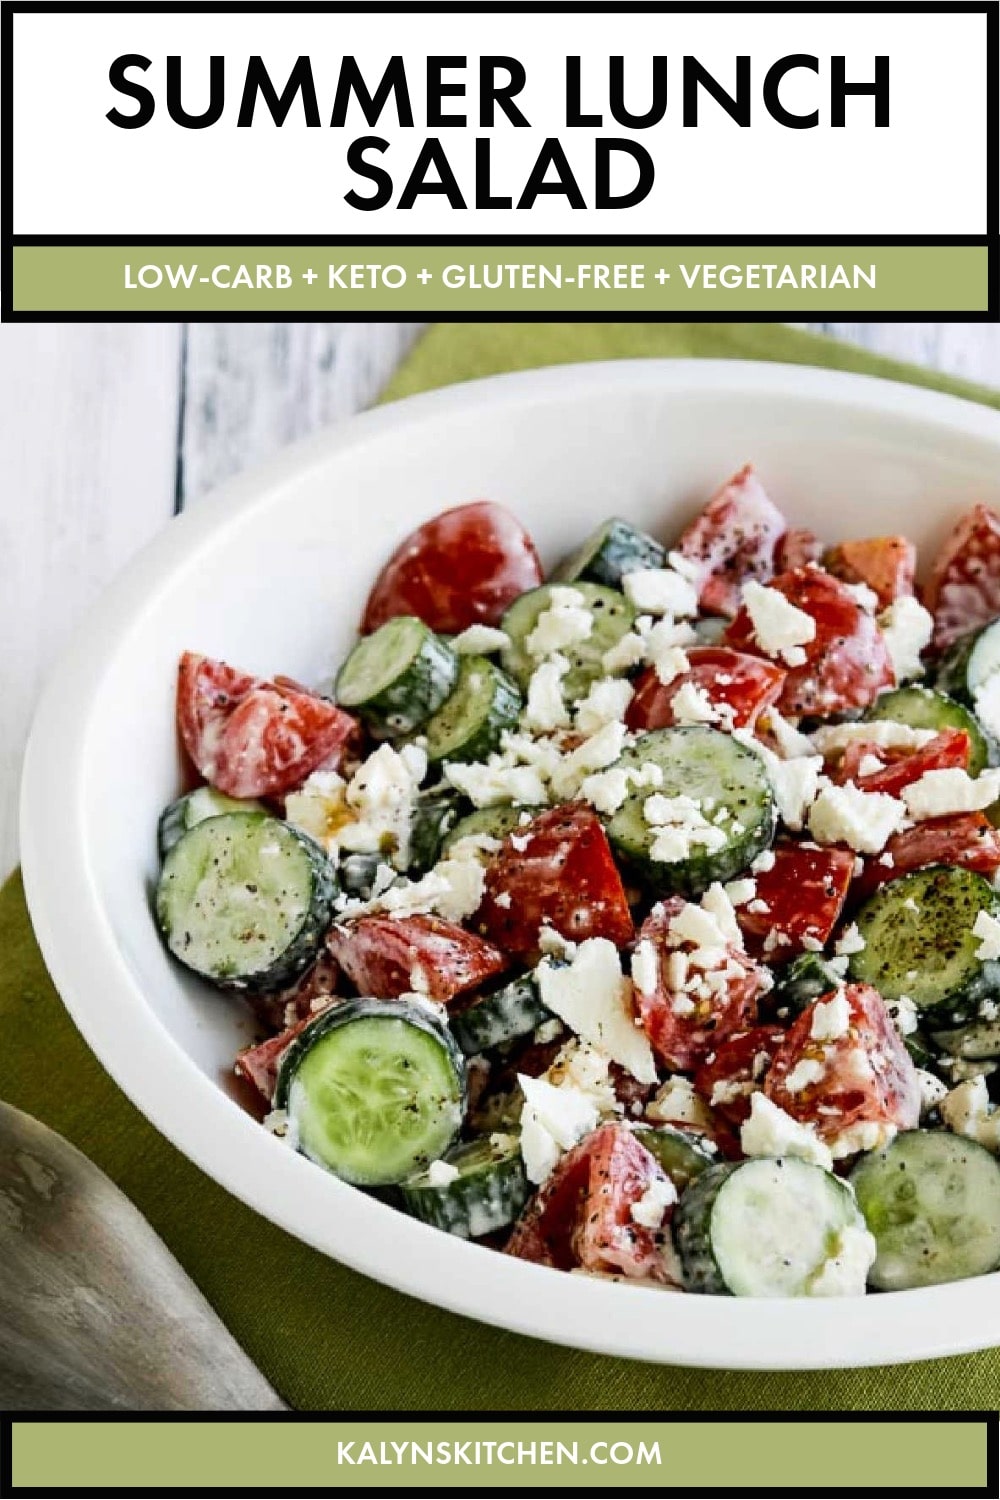 Pinterest image of Summer Lunch Salad